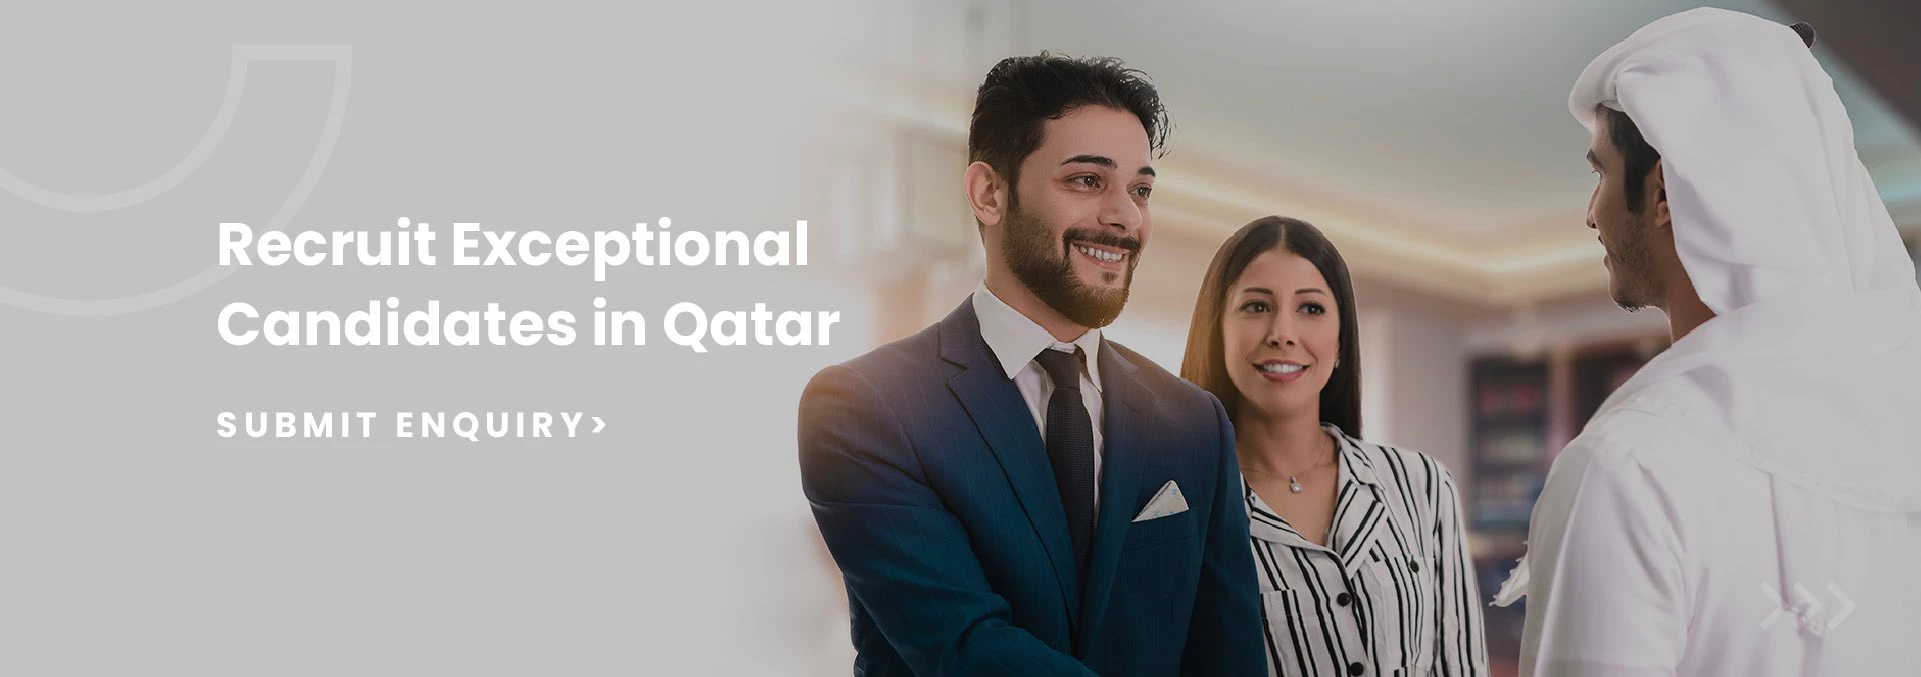 Recruit Exceptional Candidates in Qatar